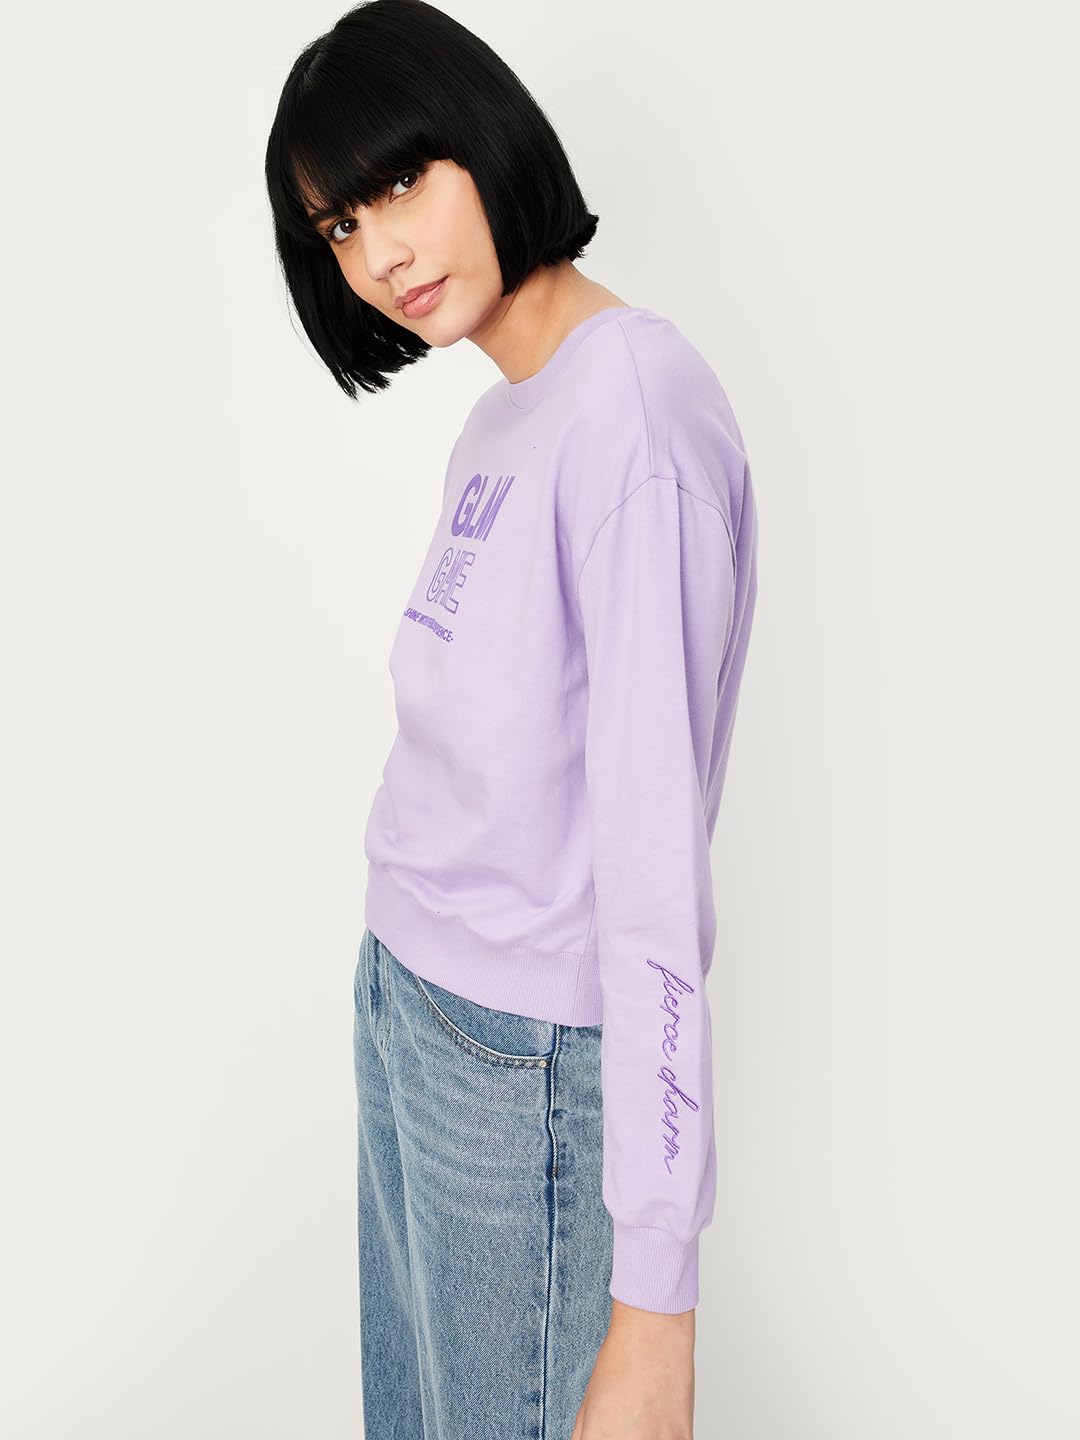 Max Women Typographic Printed Sweatshirt,Lilac,XS